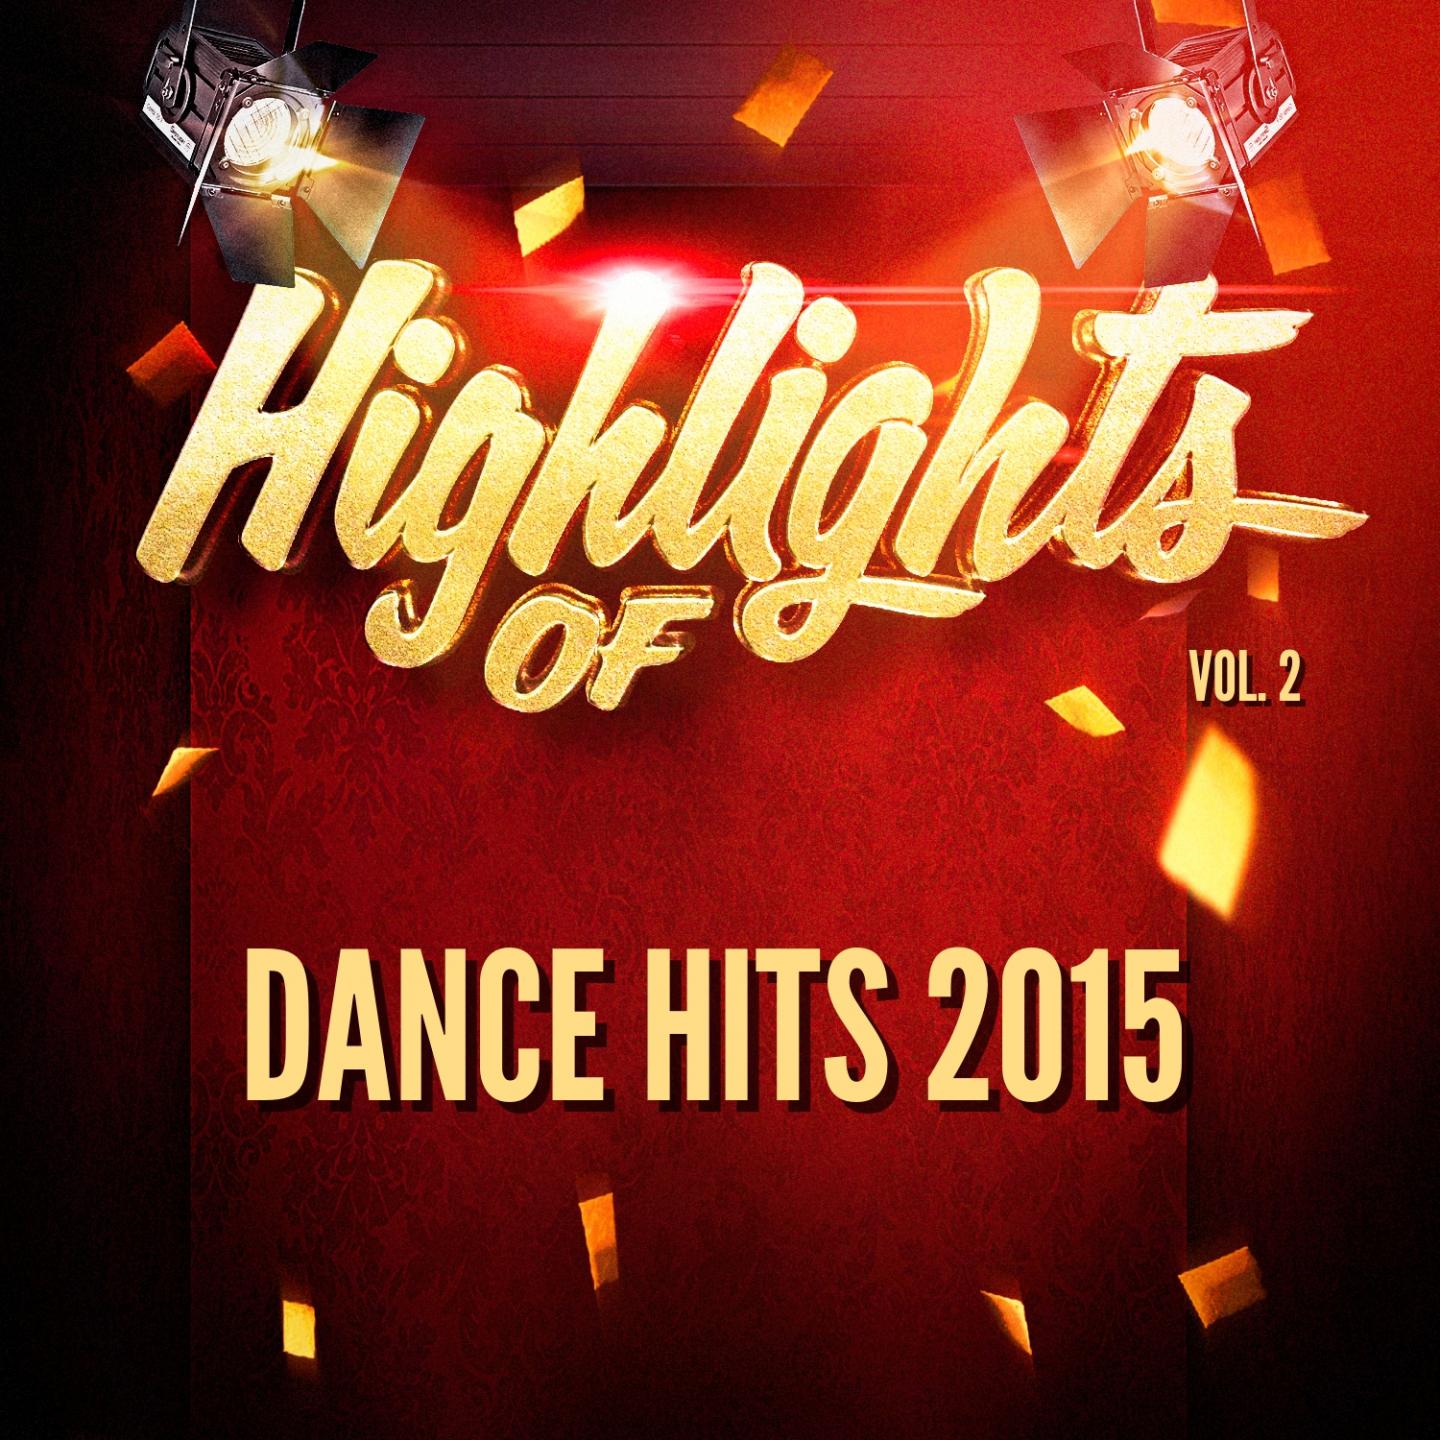 Highlights of Dance Hits 2015, Vol. 2